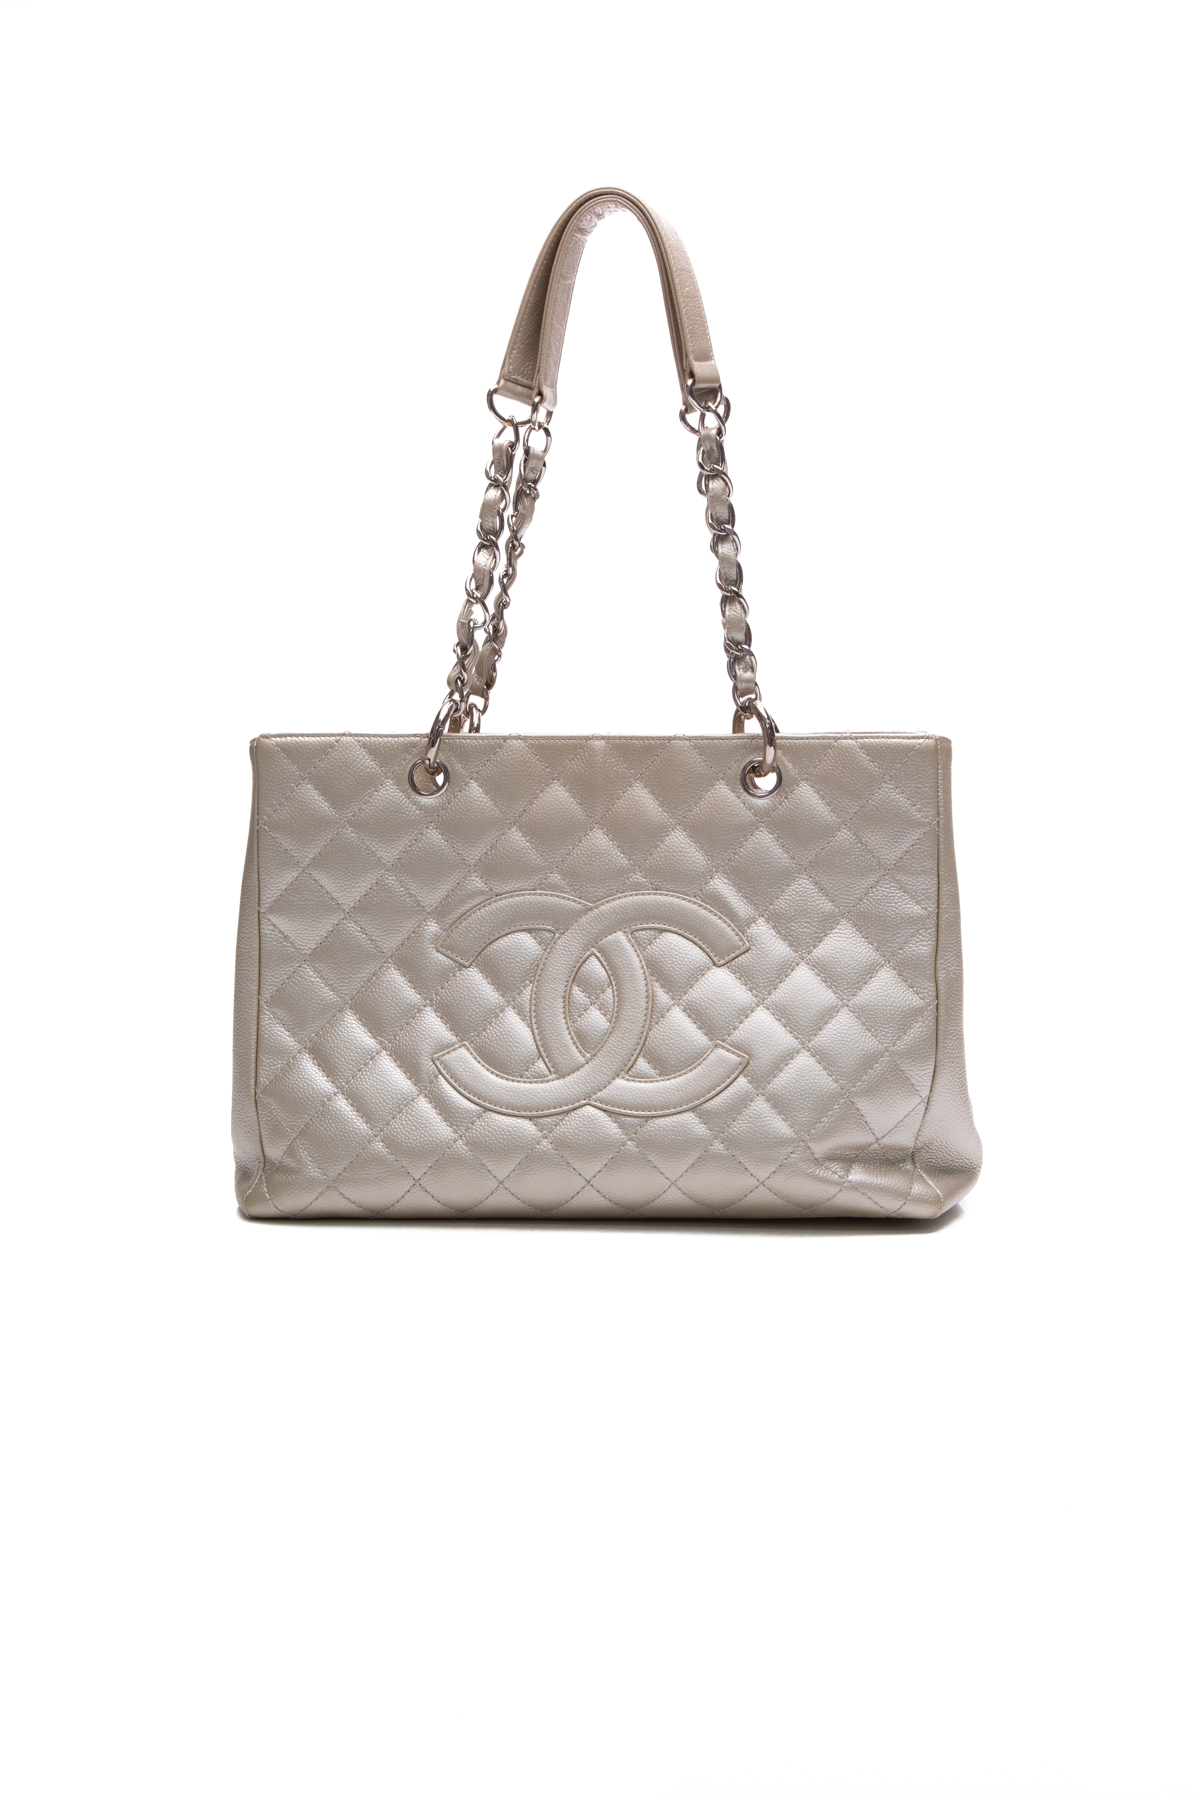 Chanel Grand Shopping Tote bag